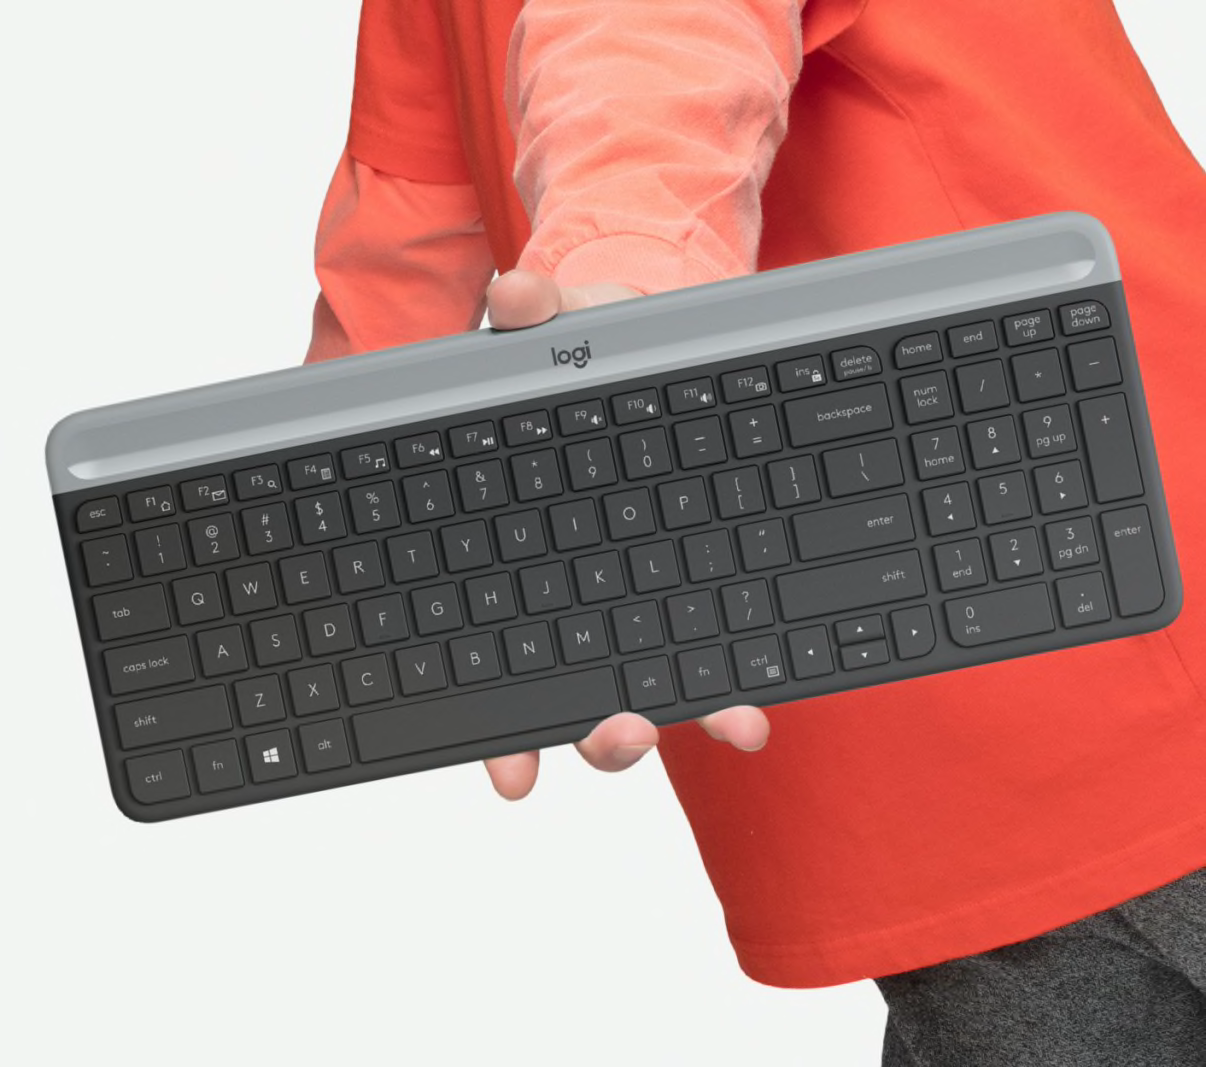 Logitech Slim Wireless Keyboard Mouse Combo